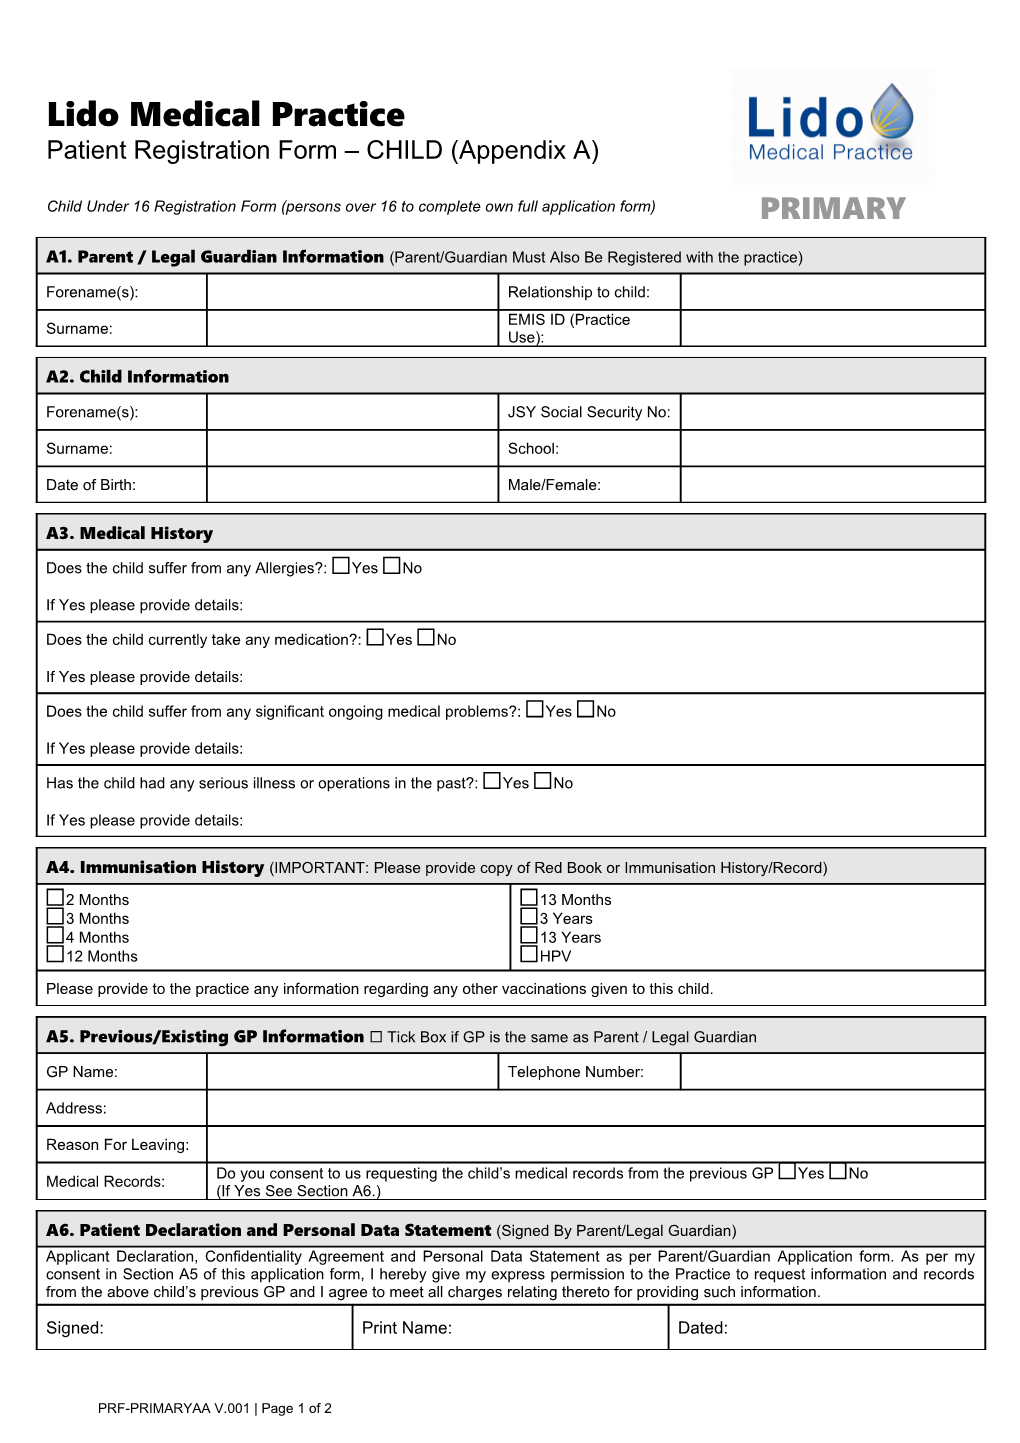 Patient Regisration Form - Child